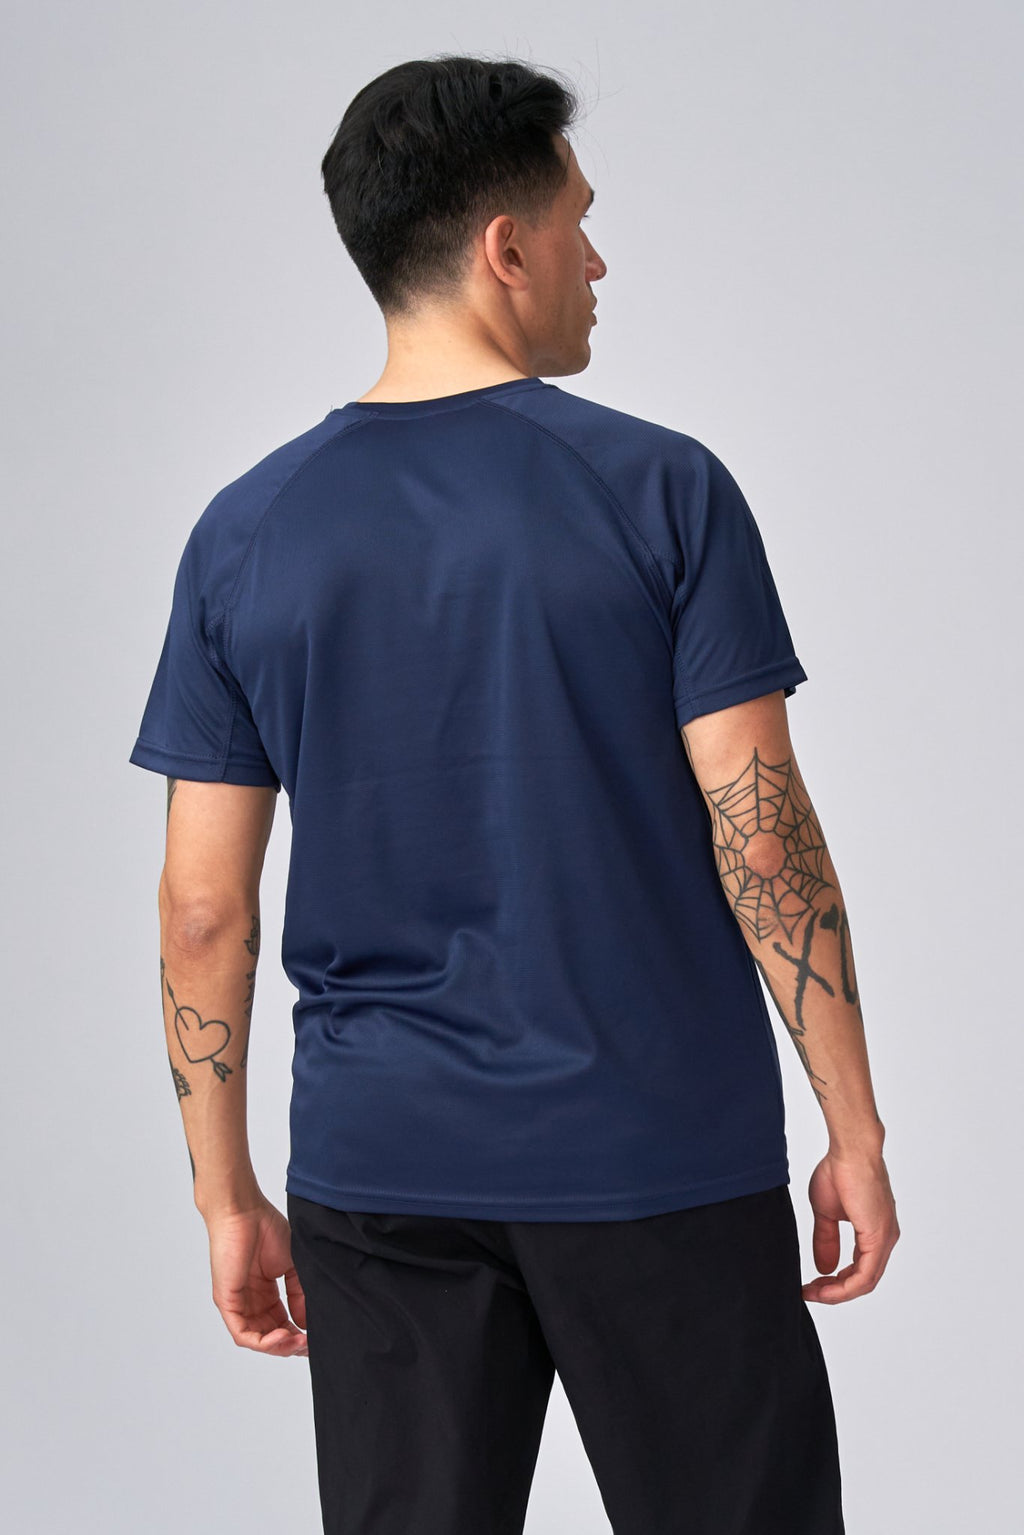 Training T-shirt - Navy